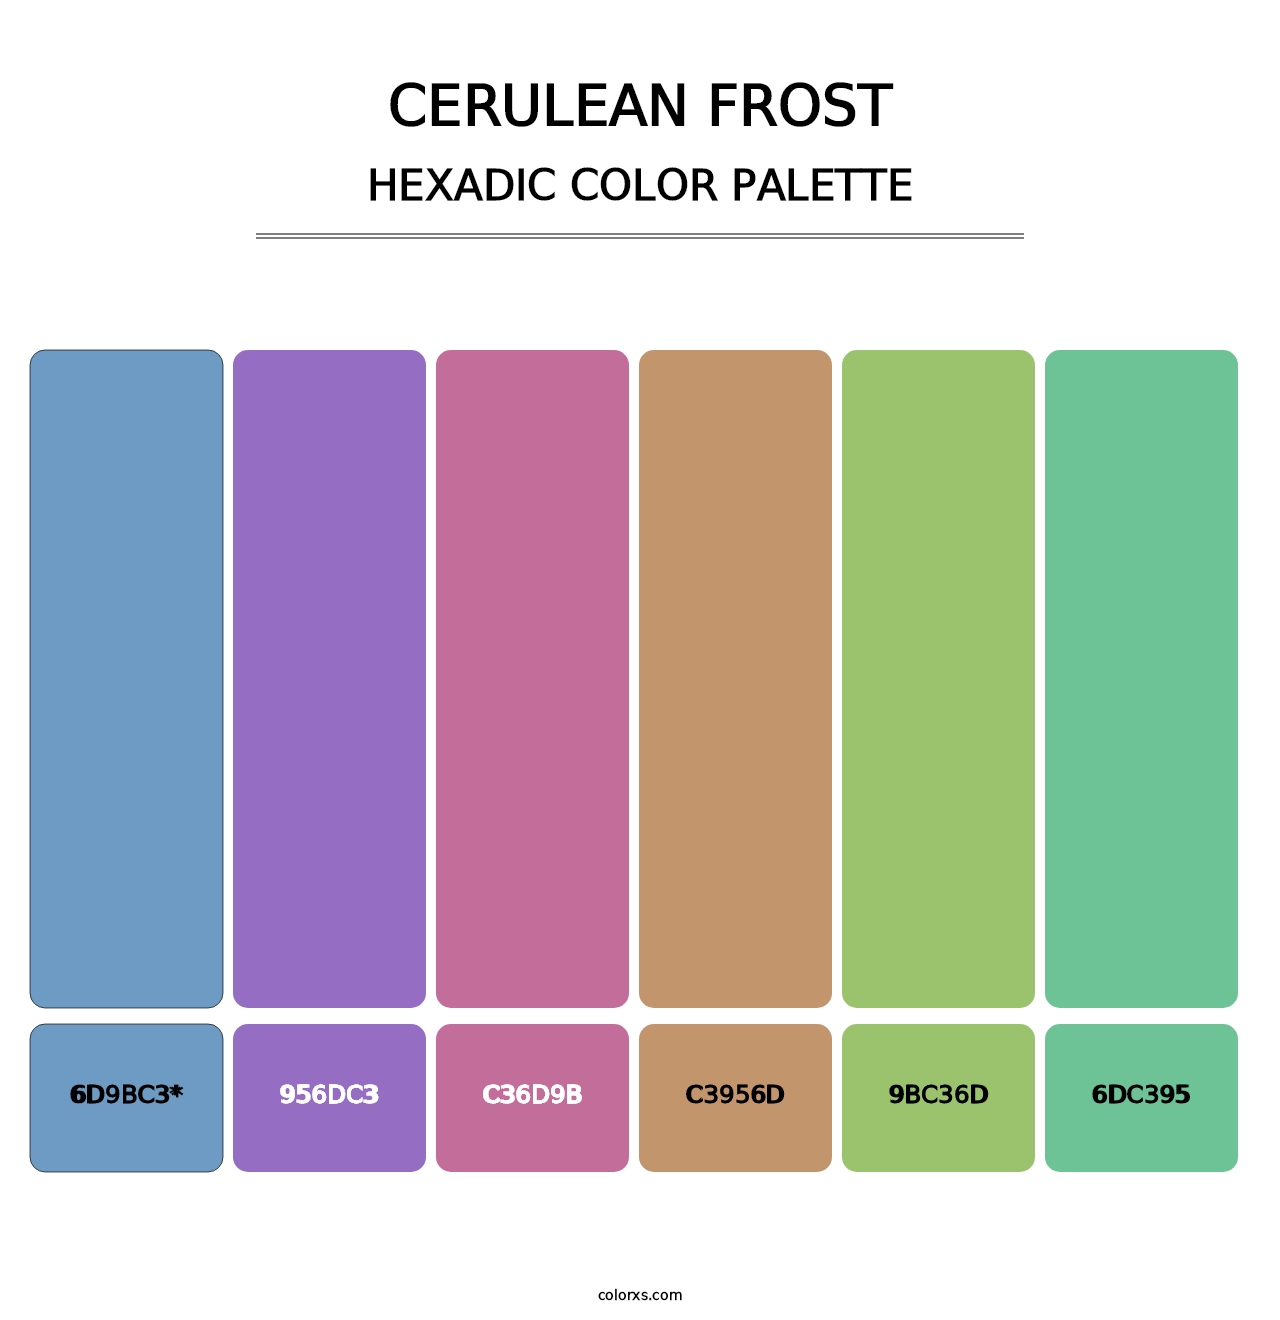 Cerulean Frost - Hexadic Color Palette